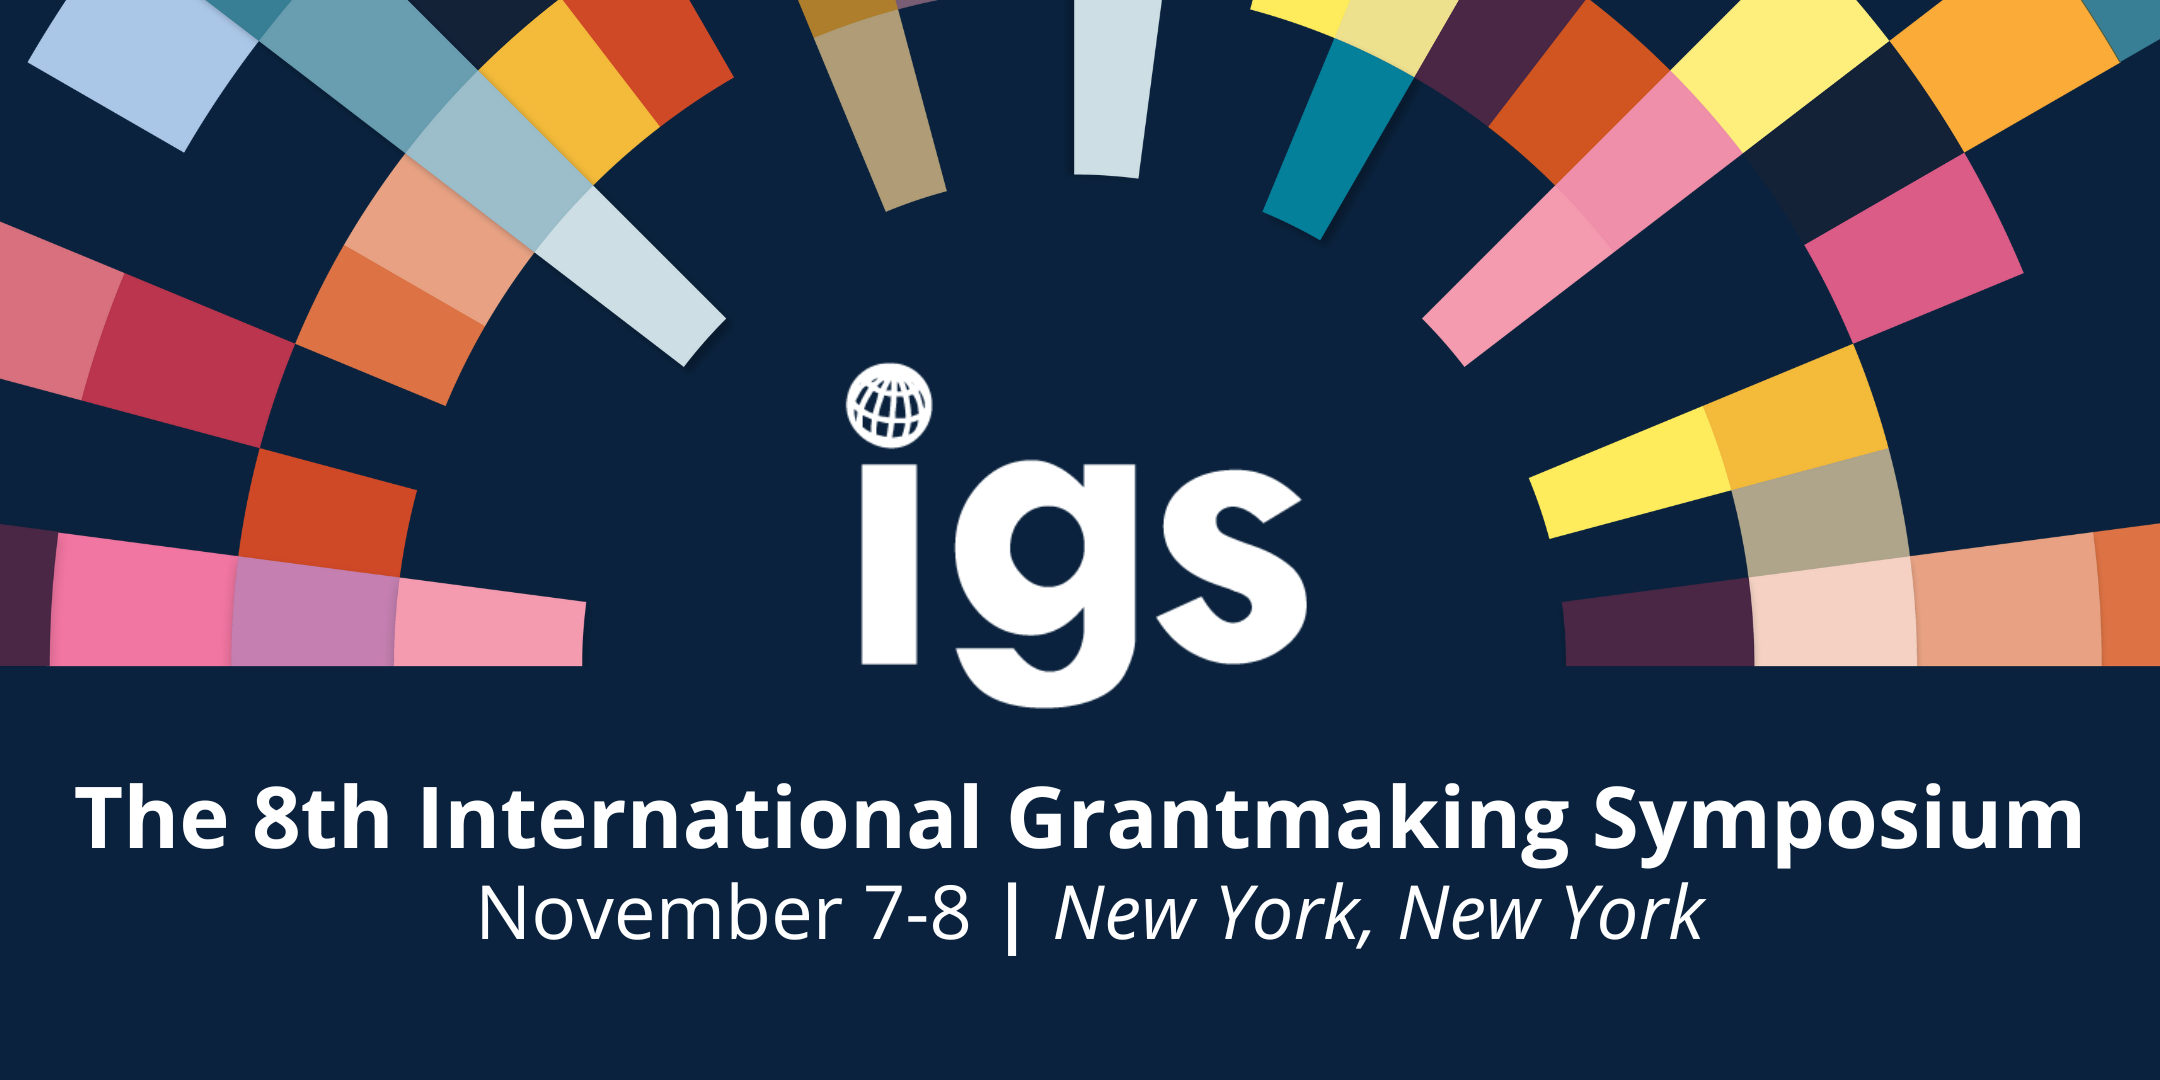 The 8th International Grantmaking Symposium 